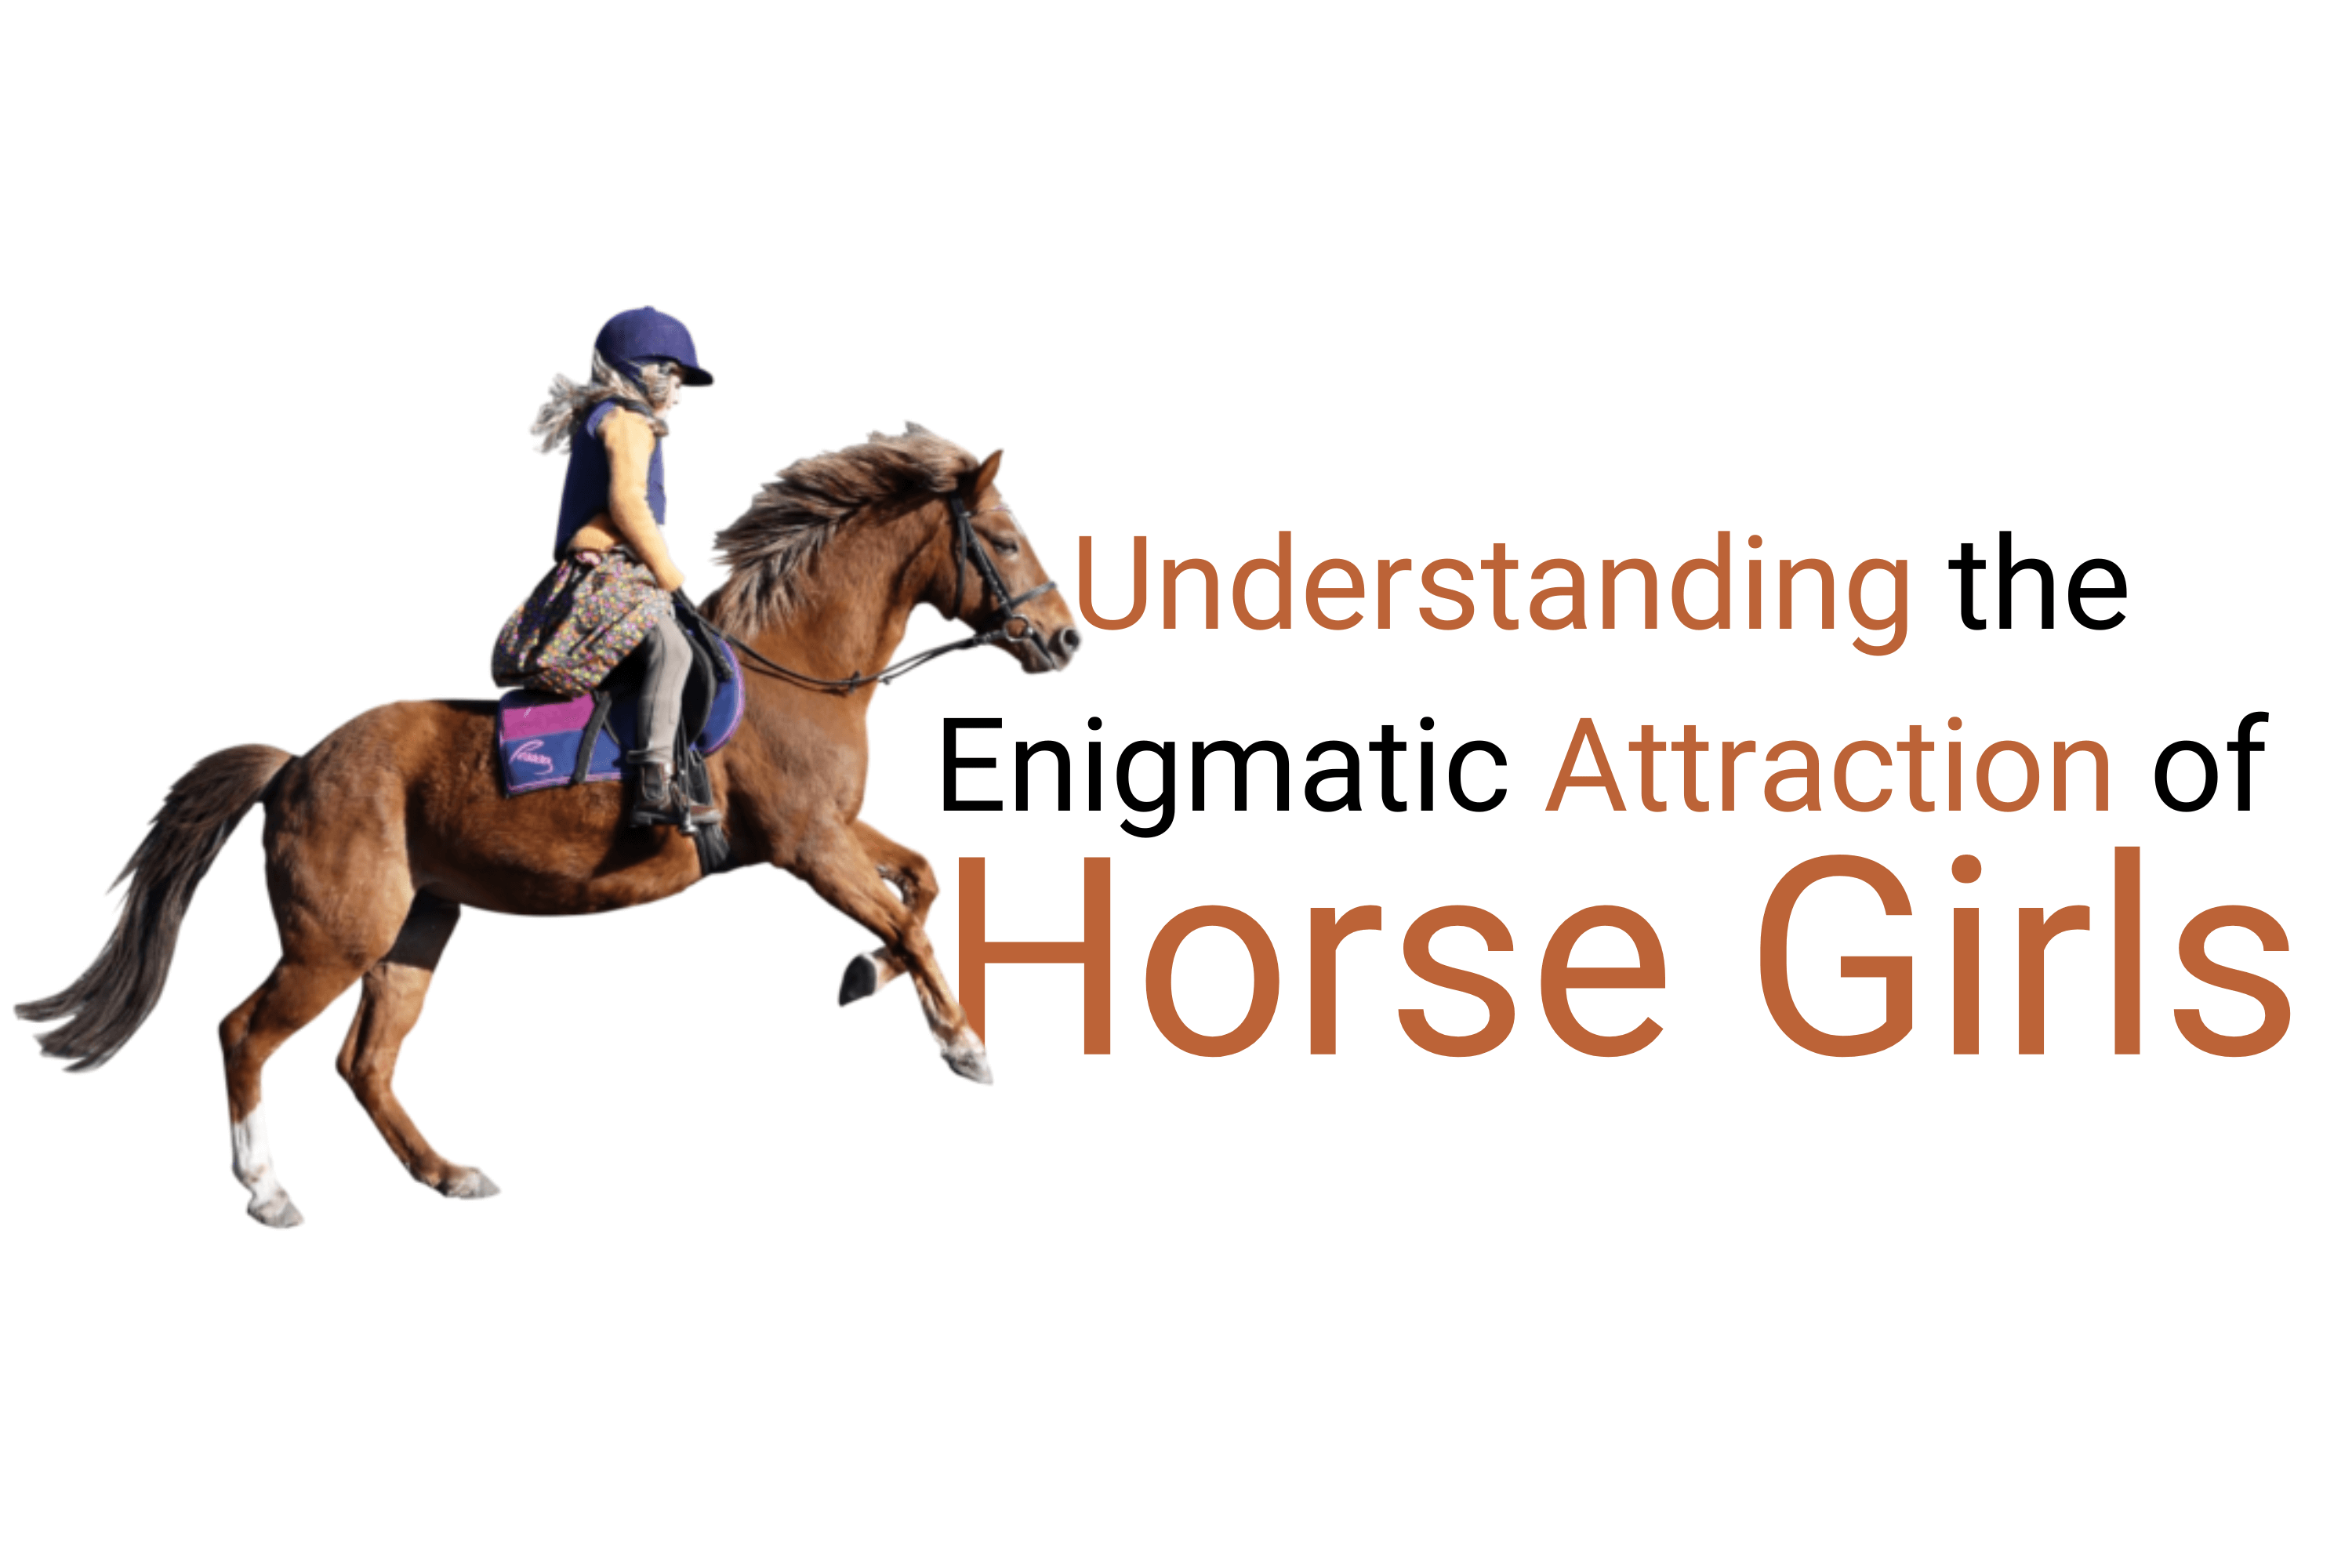 Why do girls like horses